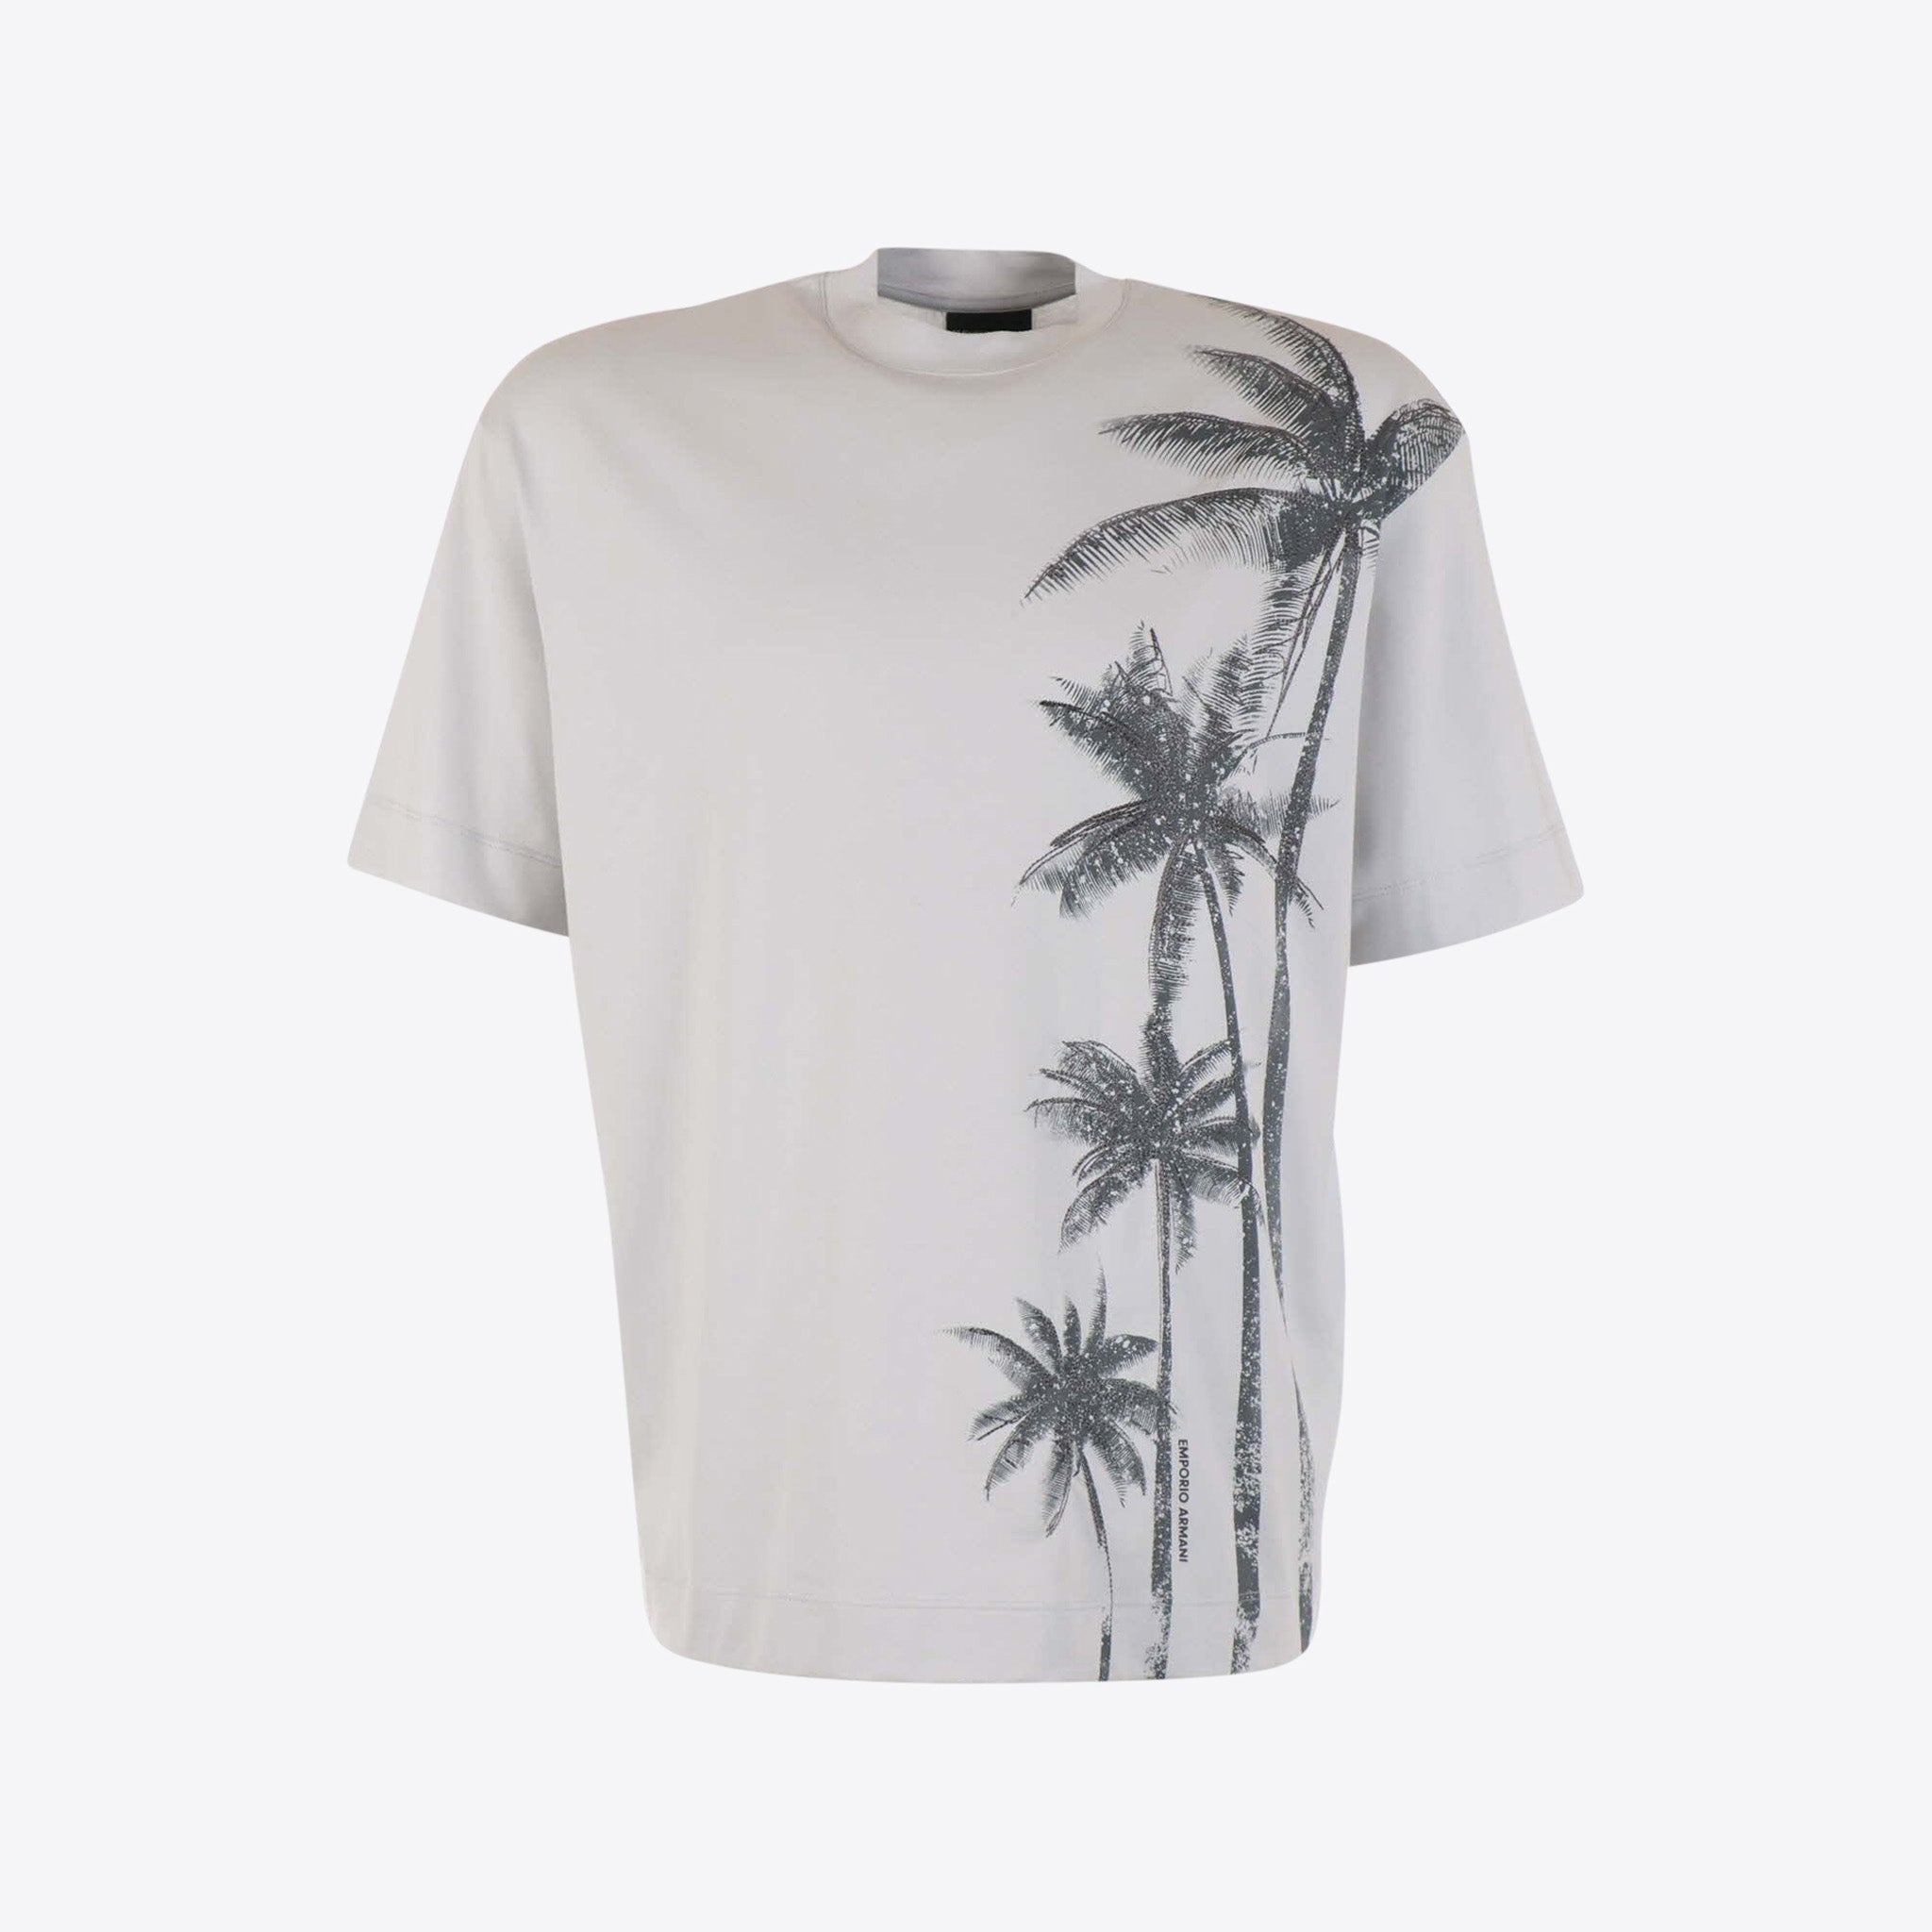 Emporio Armani T-shirt Mastic Palm